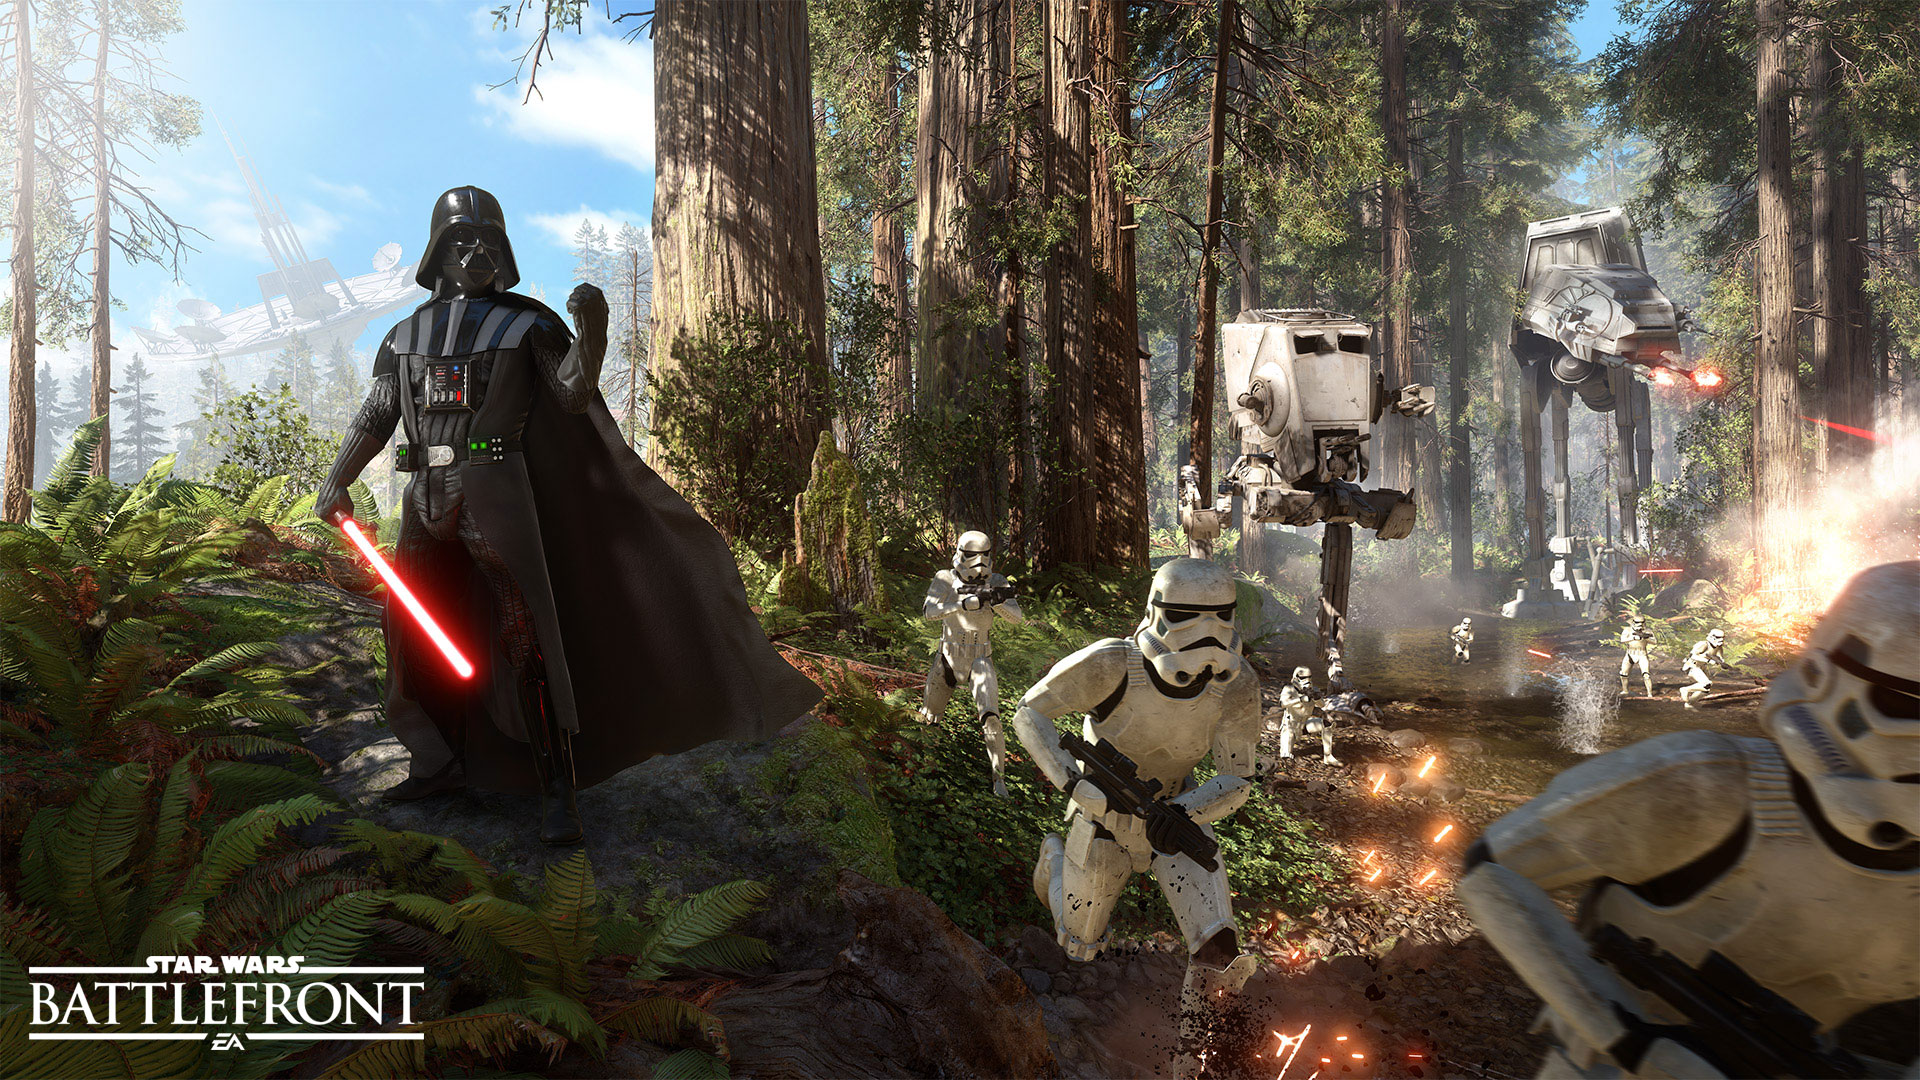 DICE details three new Star Wars: Battlefront game modes